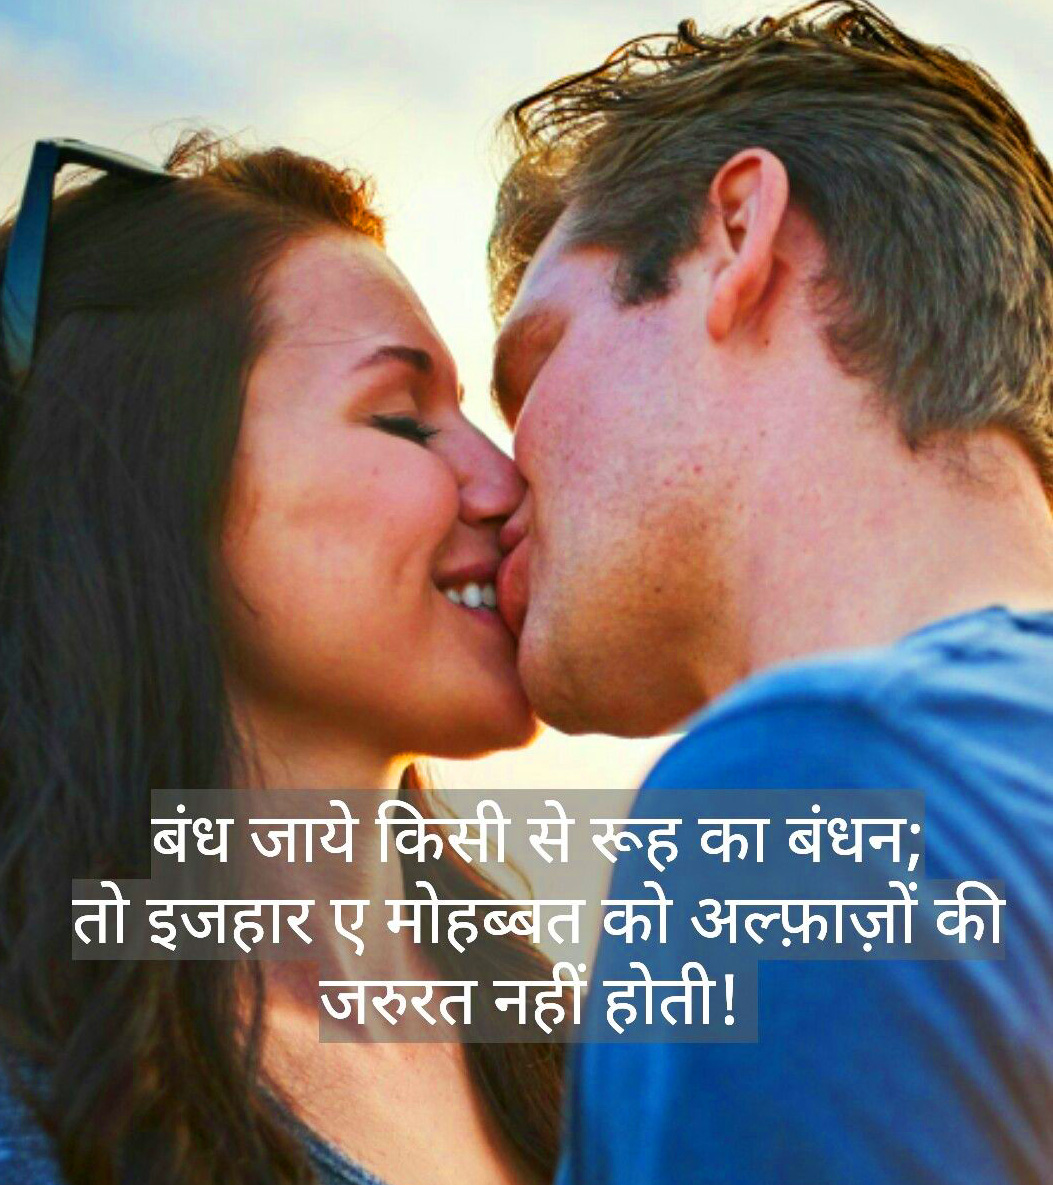 Hindi Love Status Images Pics Wallpaper Download 